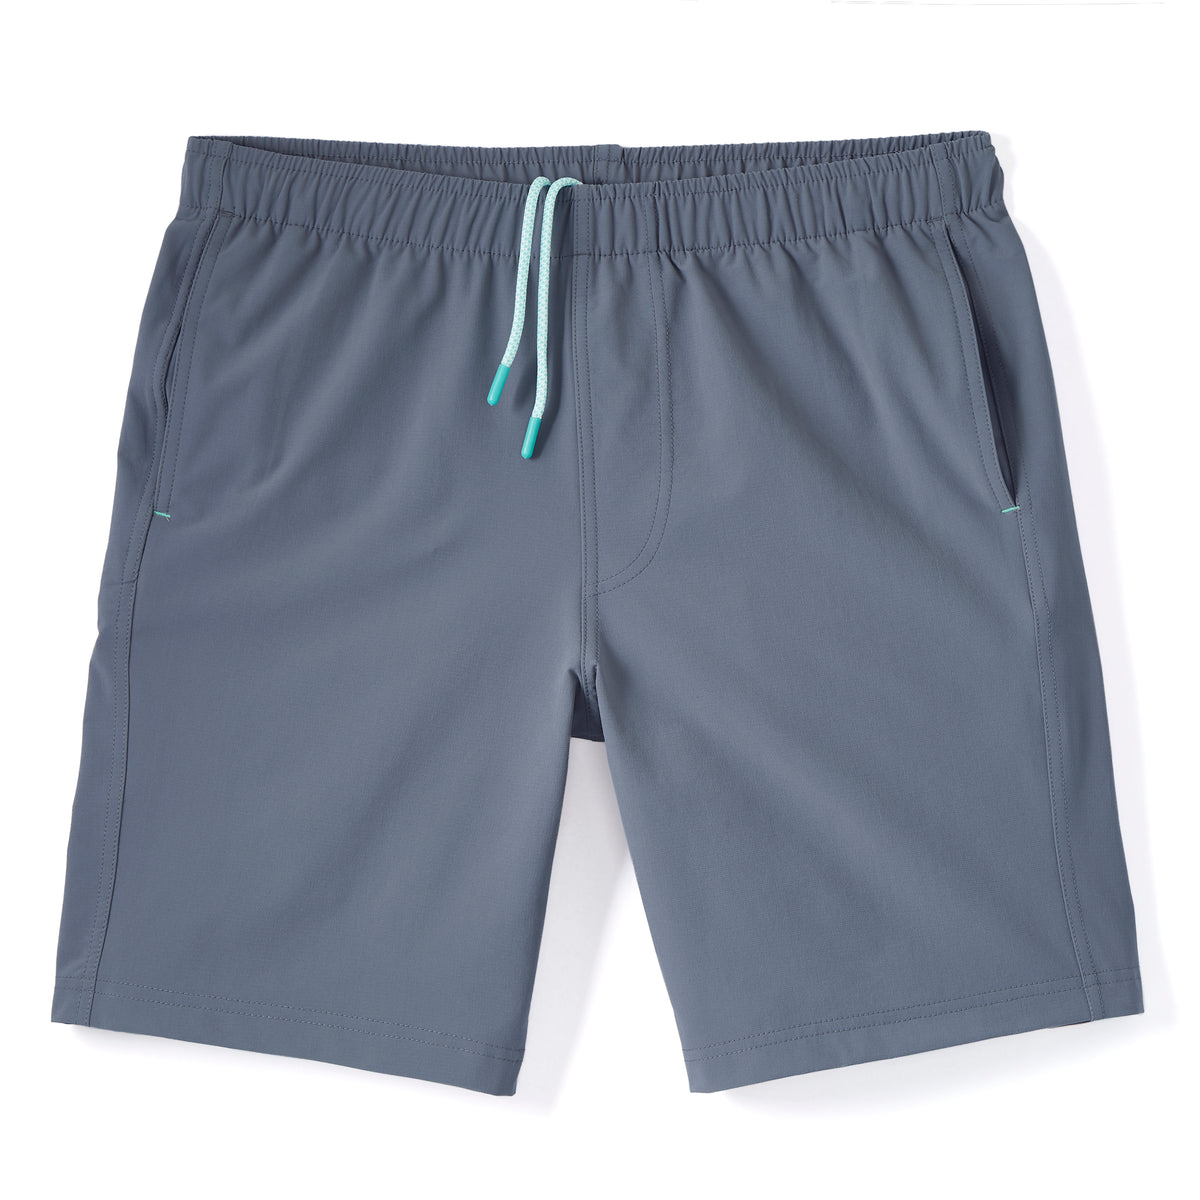 Myles Apparel | Activewear | Workout Clothes, Shorts, Shirts, Joggers